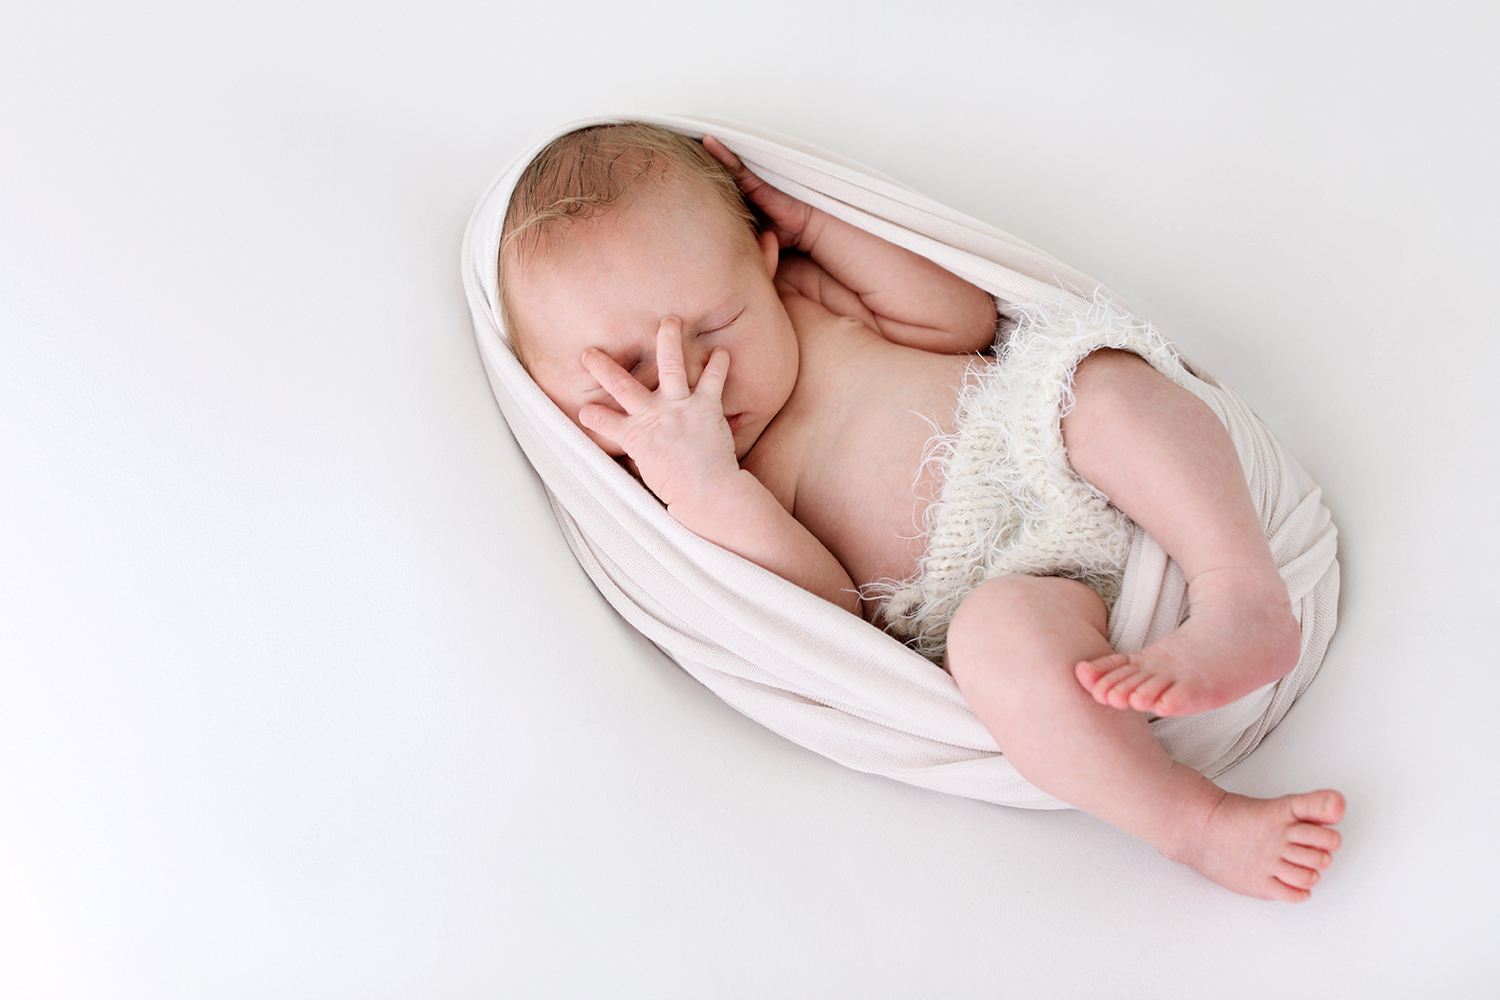 A close-up of a peaceful newborn sleeping soundly